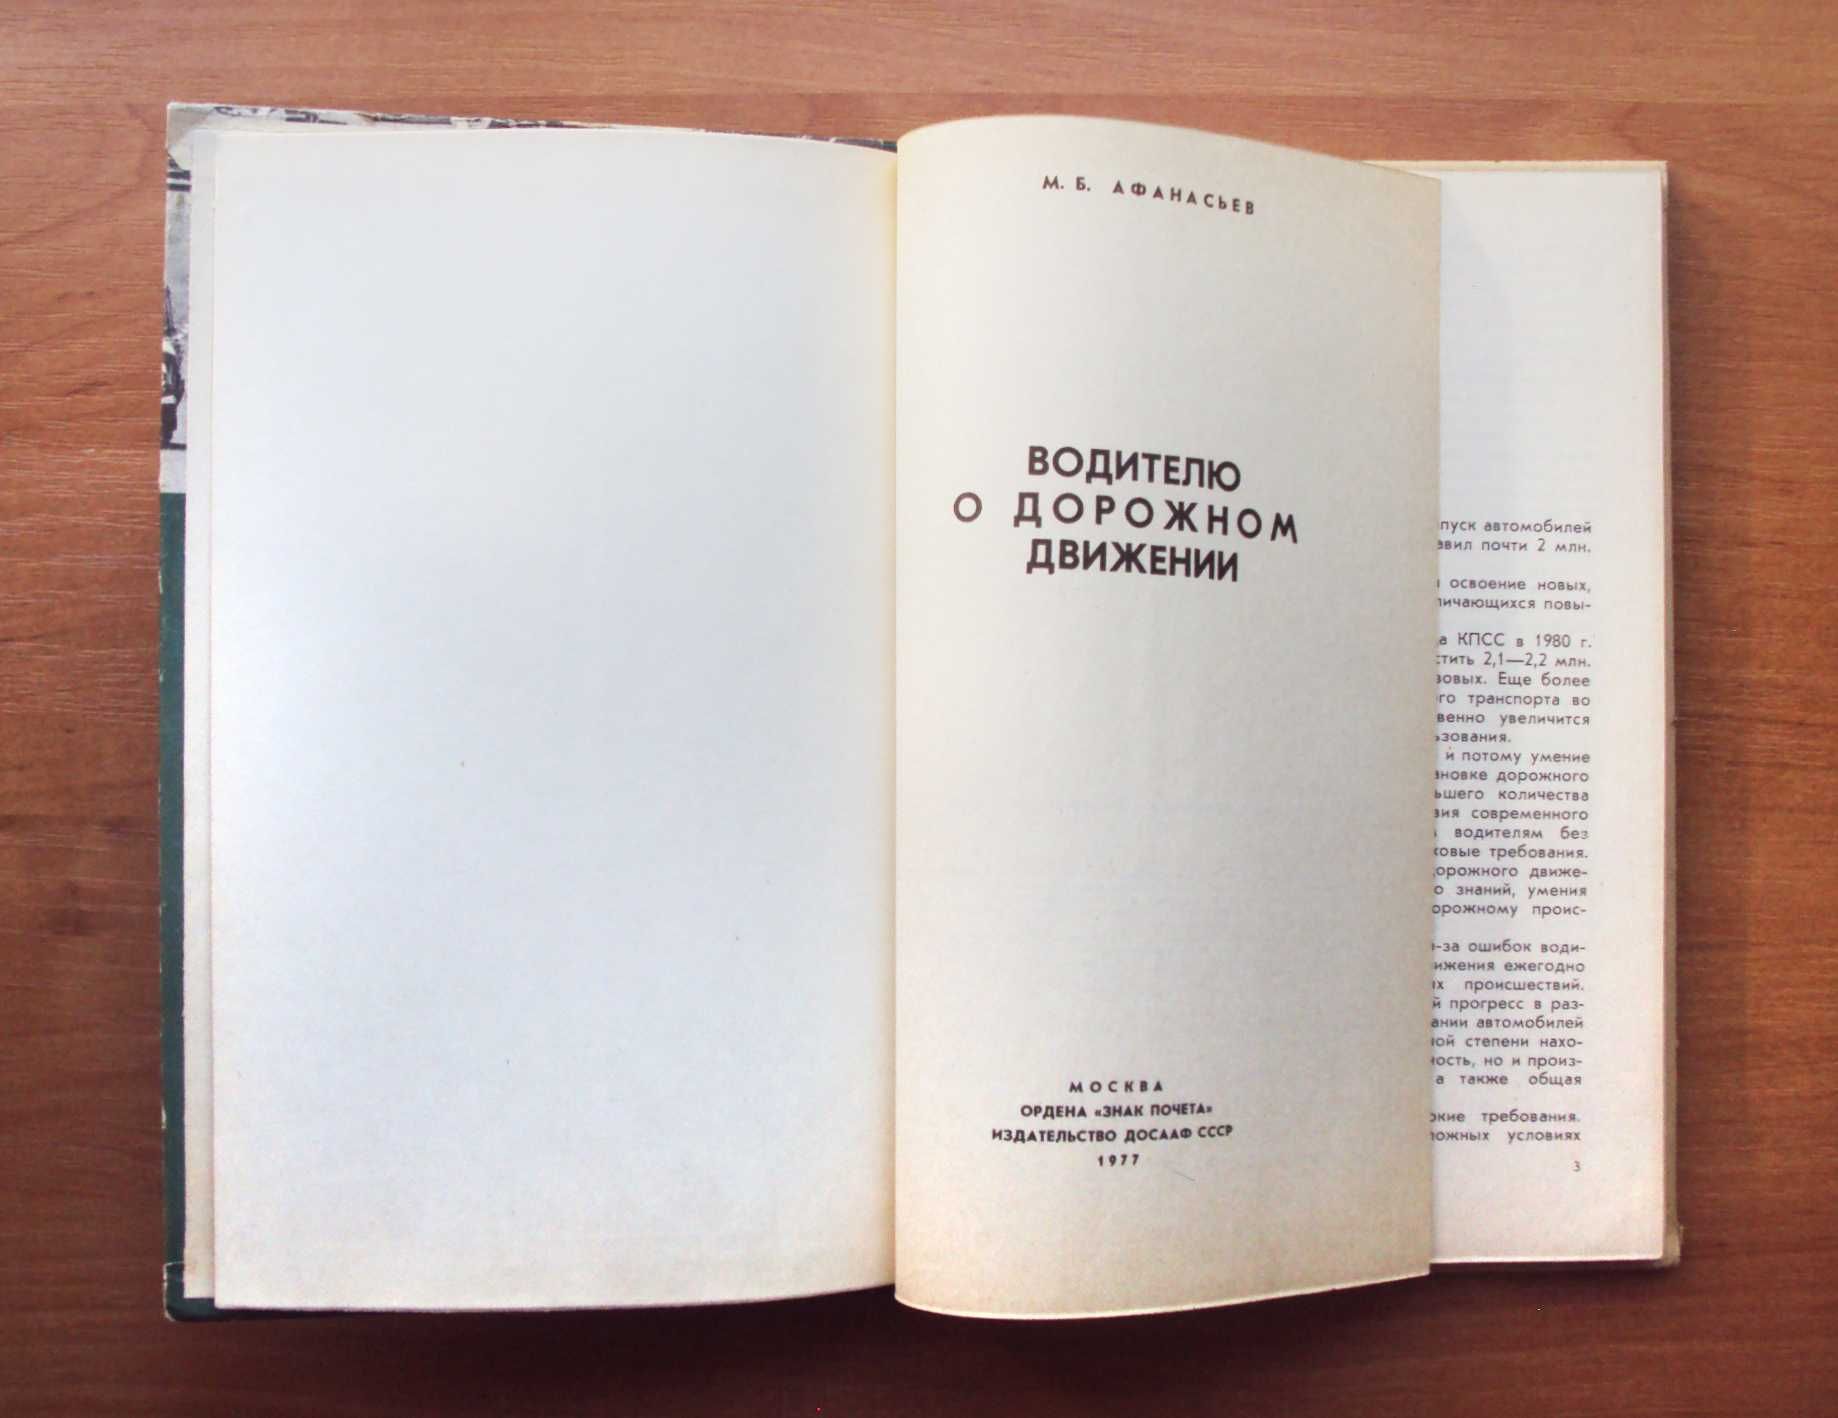 Книги автотематики времен СССР